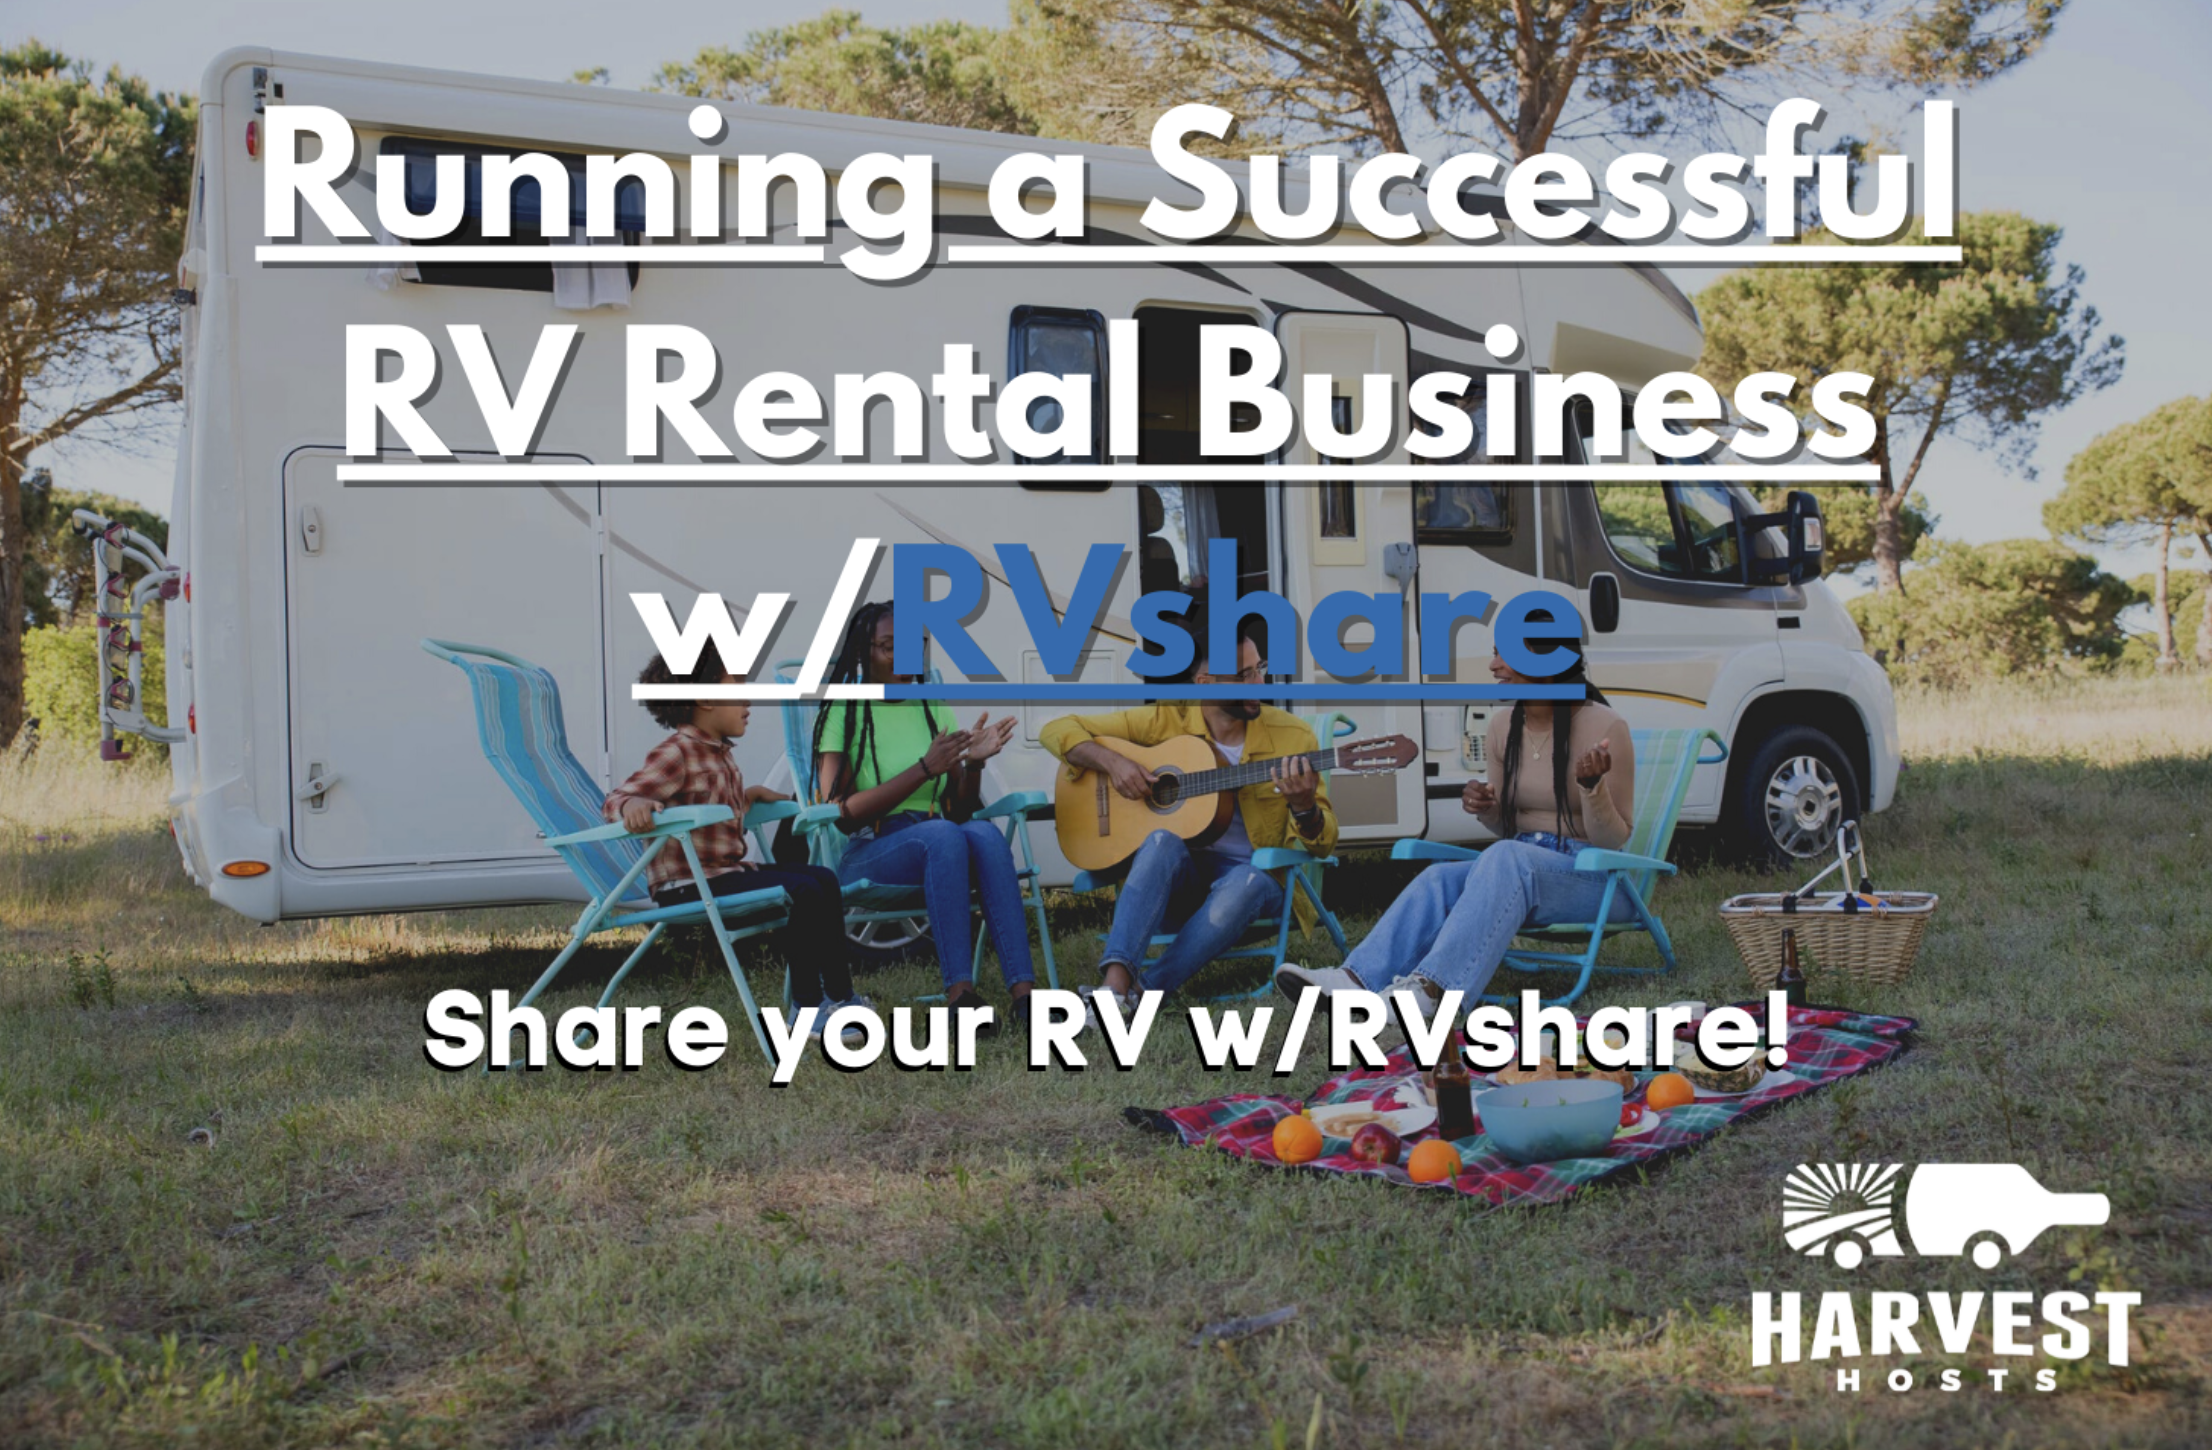 Running a Successful RV Rental Business w/RVshare